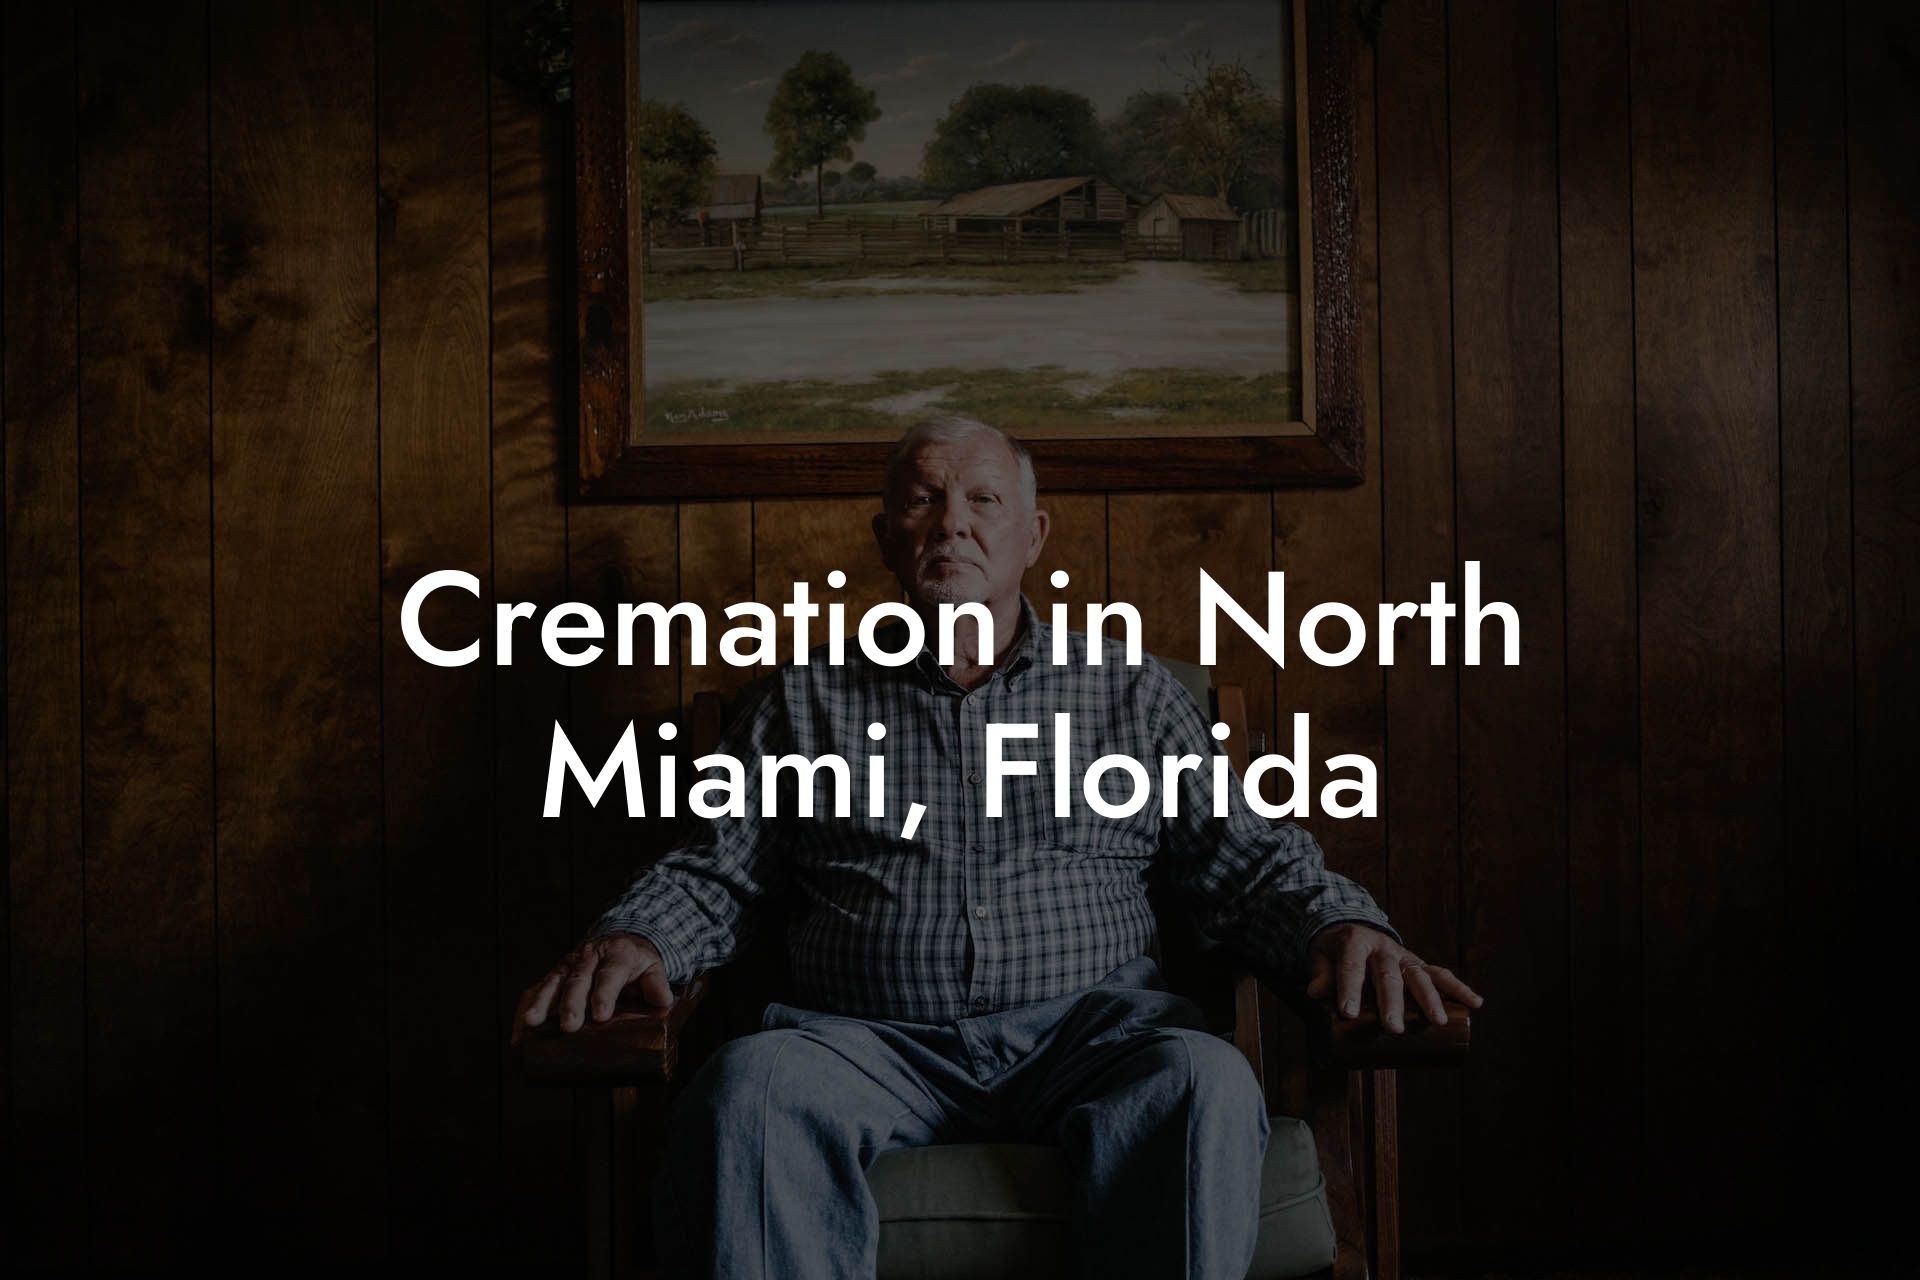 Cremation in North Miami, Florida